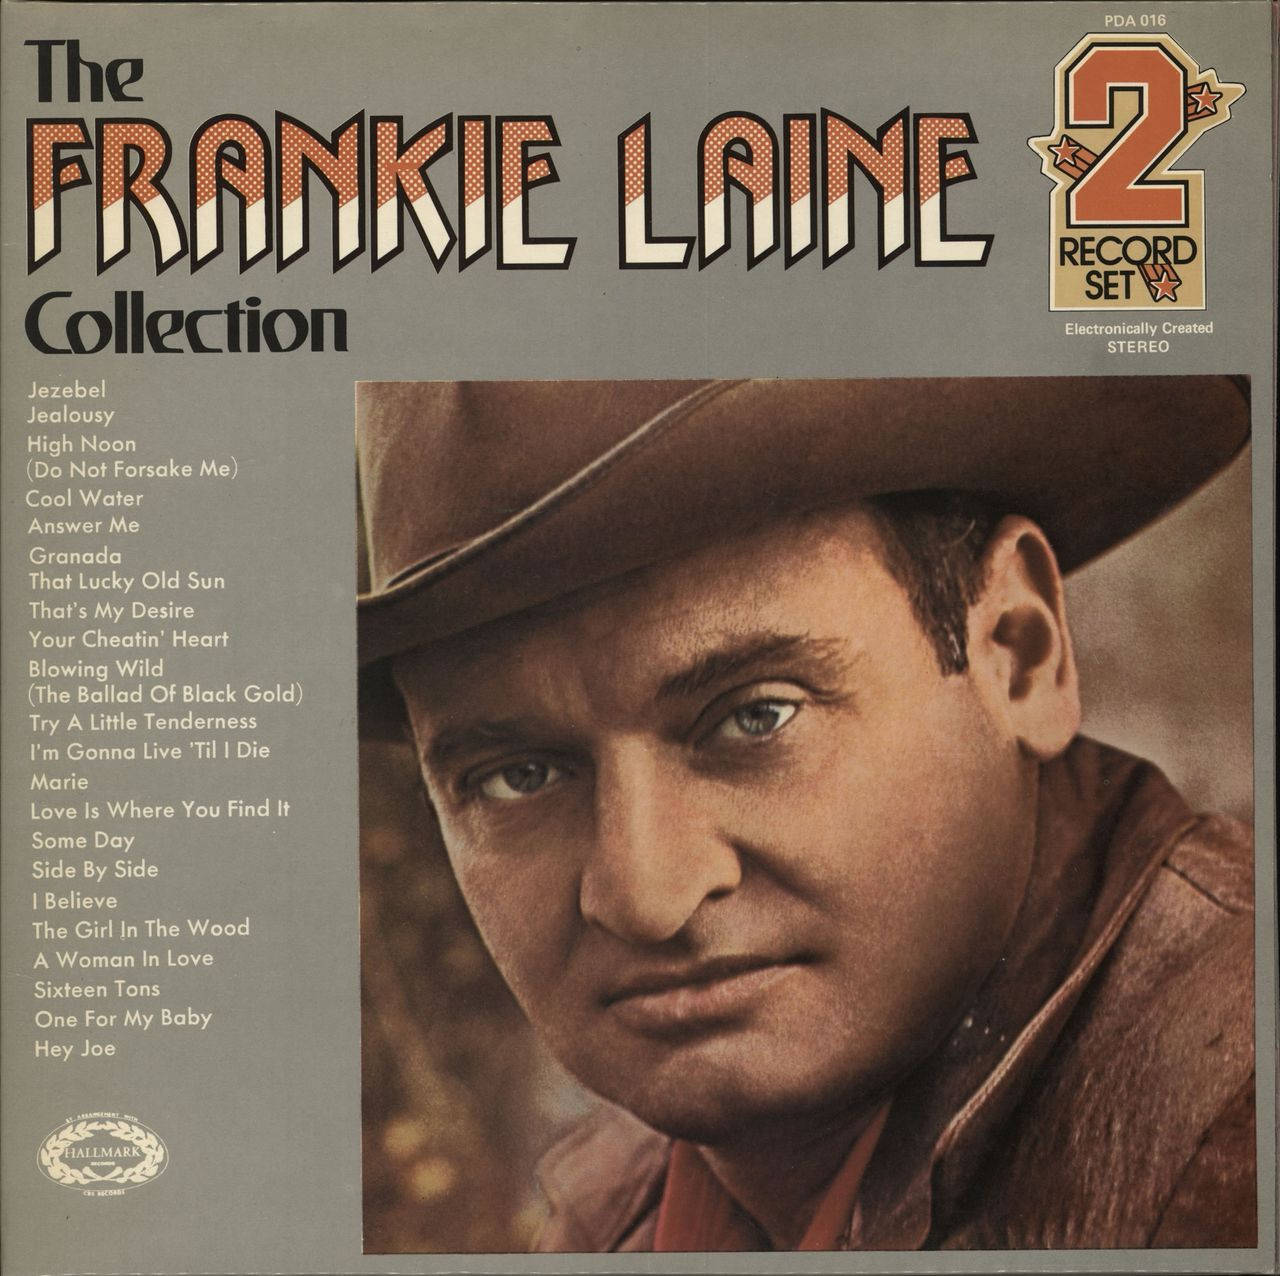 Den Frankie Laine Collection Nummer 2 Record Set Album Cover design Wallpaper